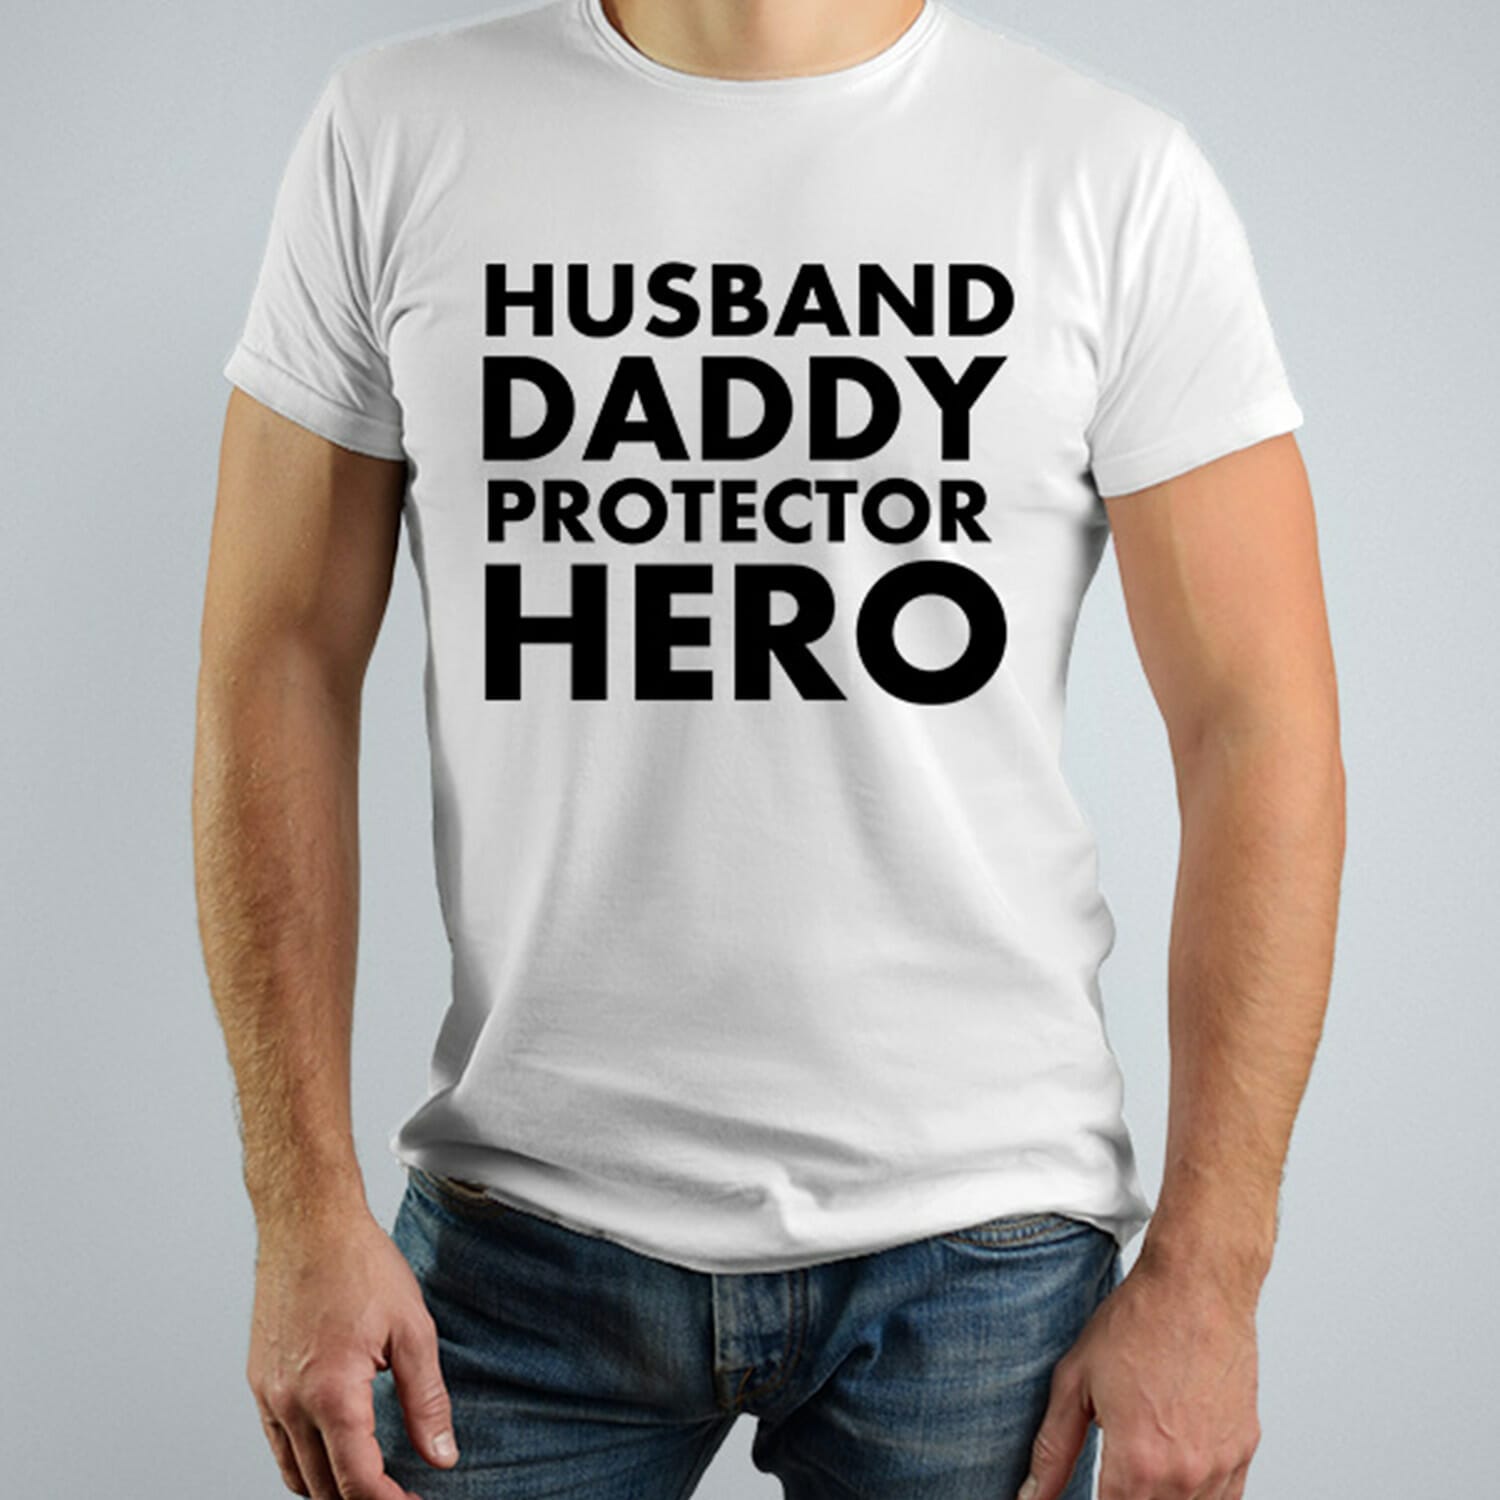 HUSBAND DADDY PROTECTOR HERO TSHIRT DESIGN